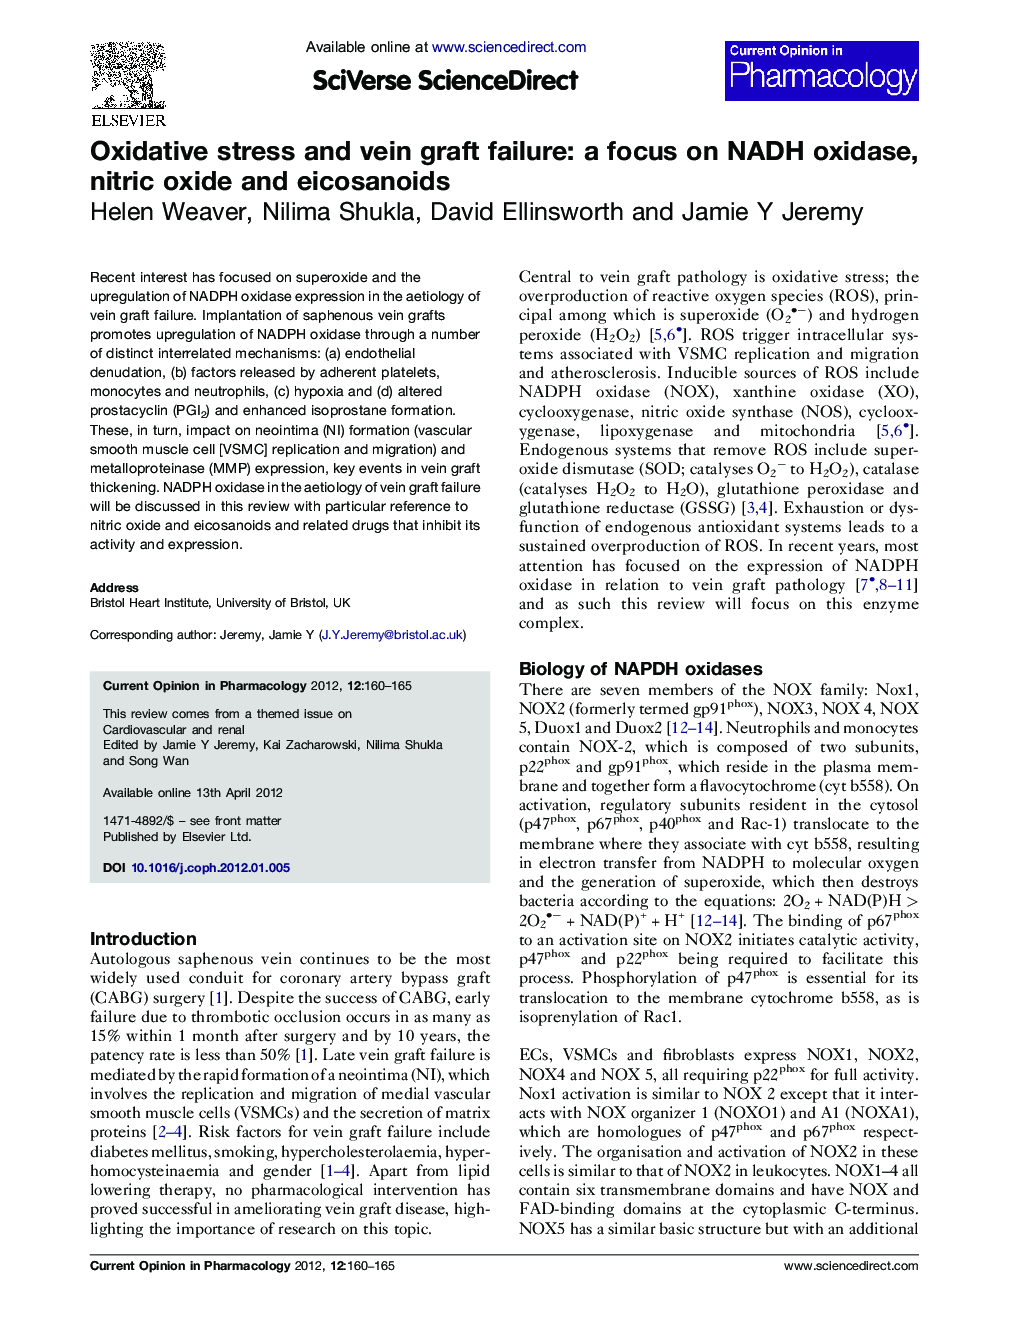 Oxidative stress and vein graft failure: a focus on NADH oxidase, nitric oxide and eicosanoids